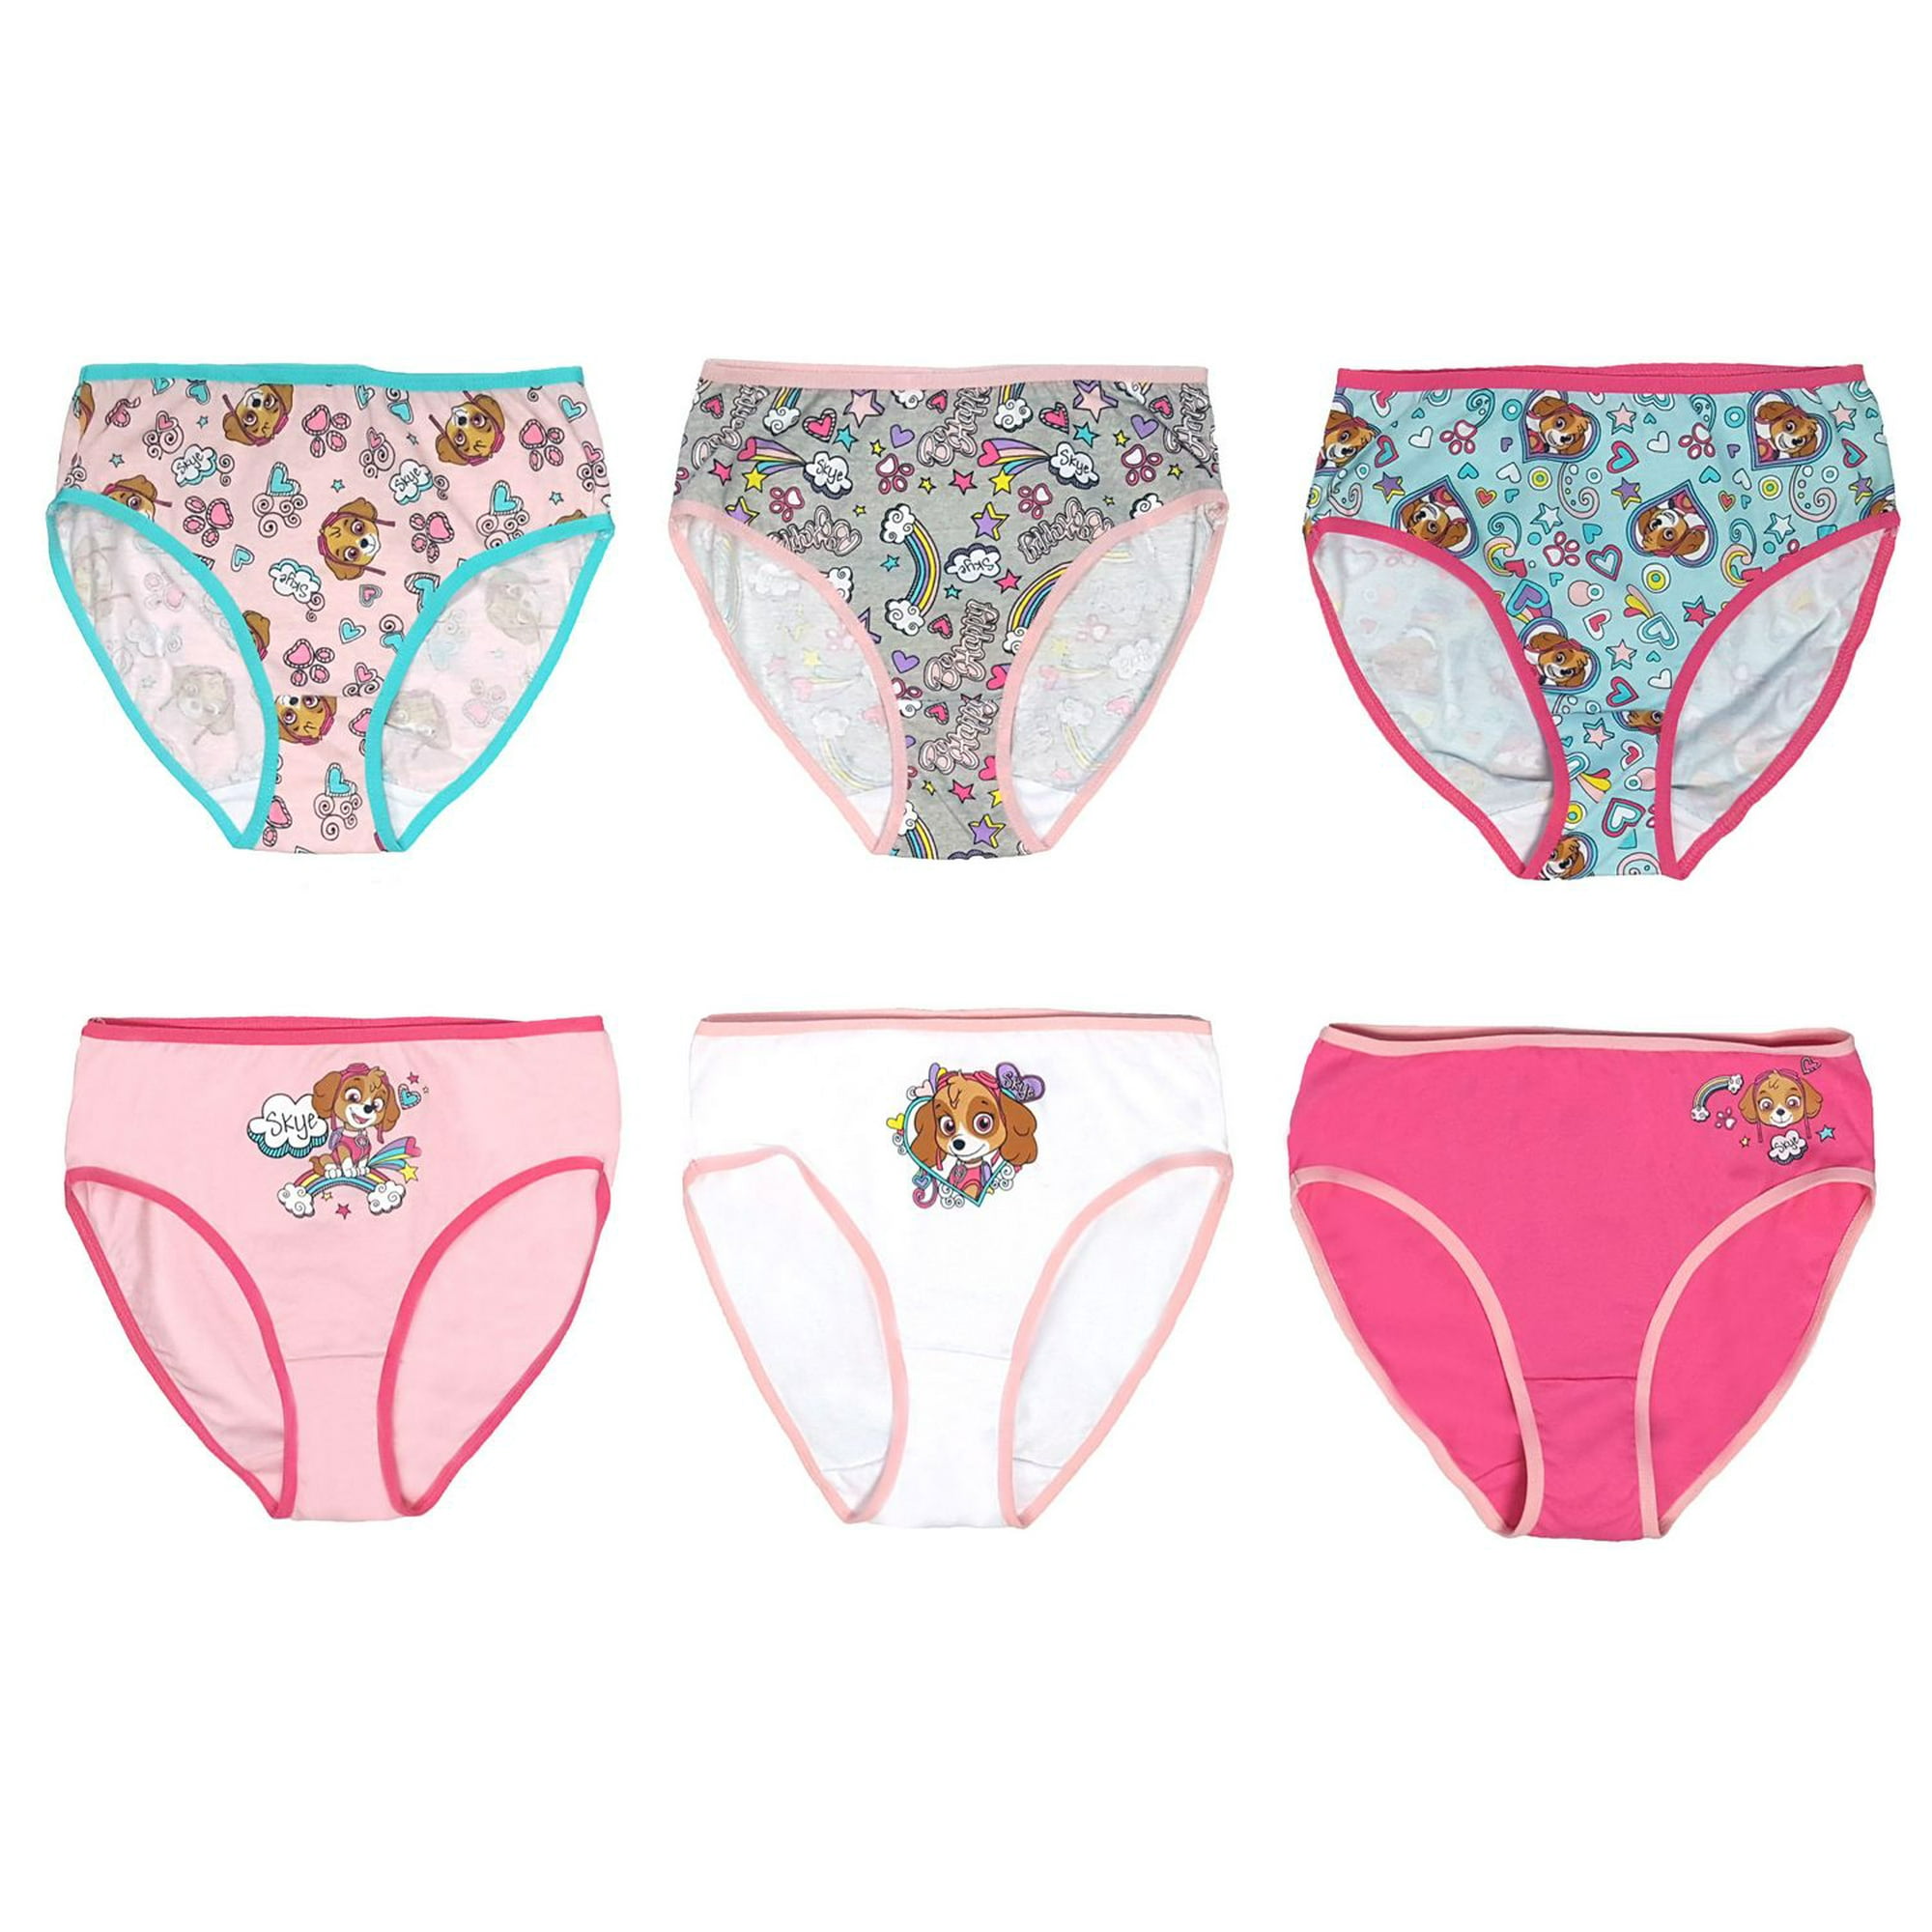 Disney Girls' Princess Underwear Pack of 5 Pink Size 4 